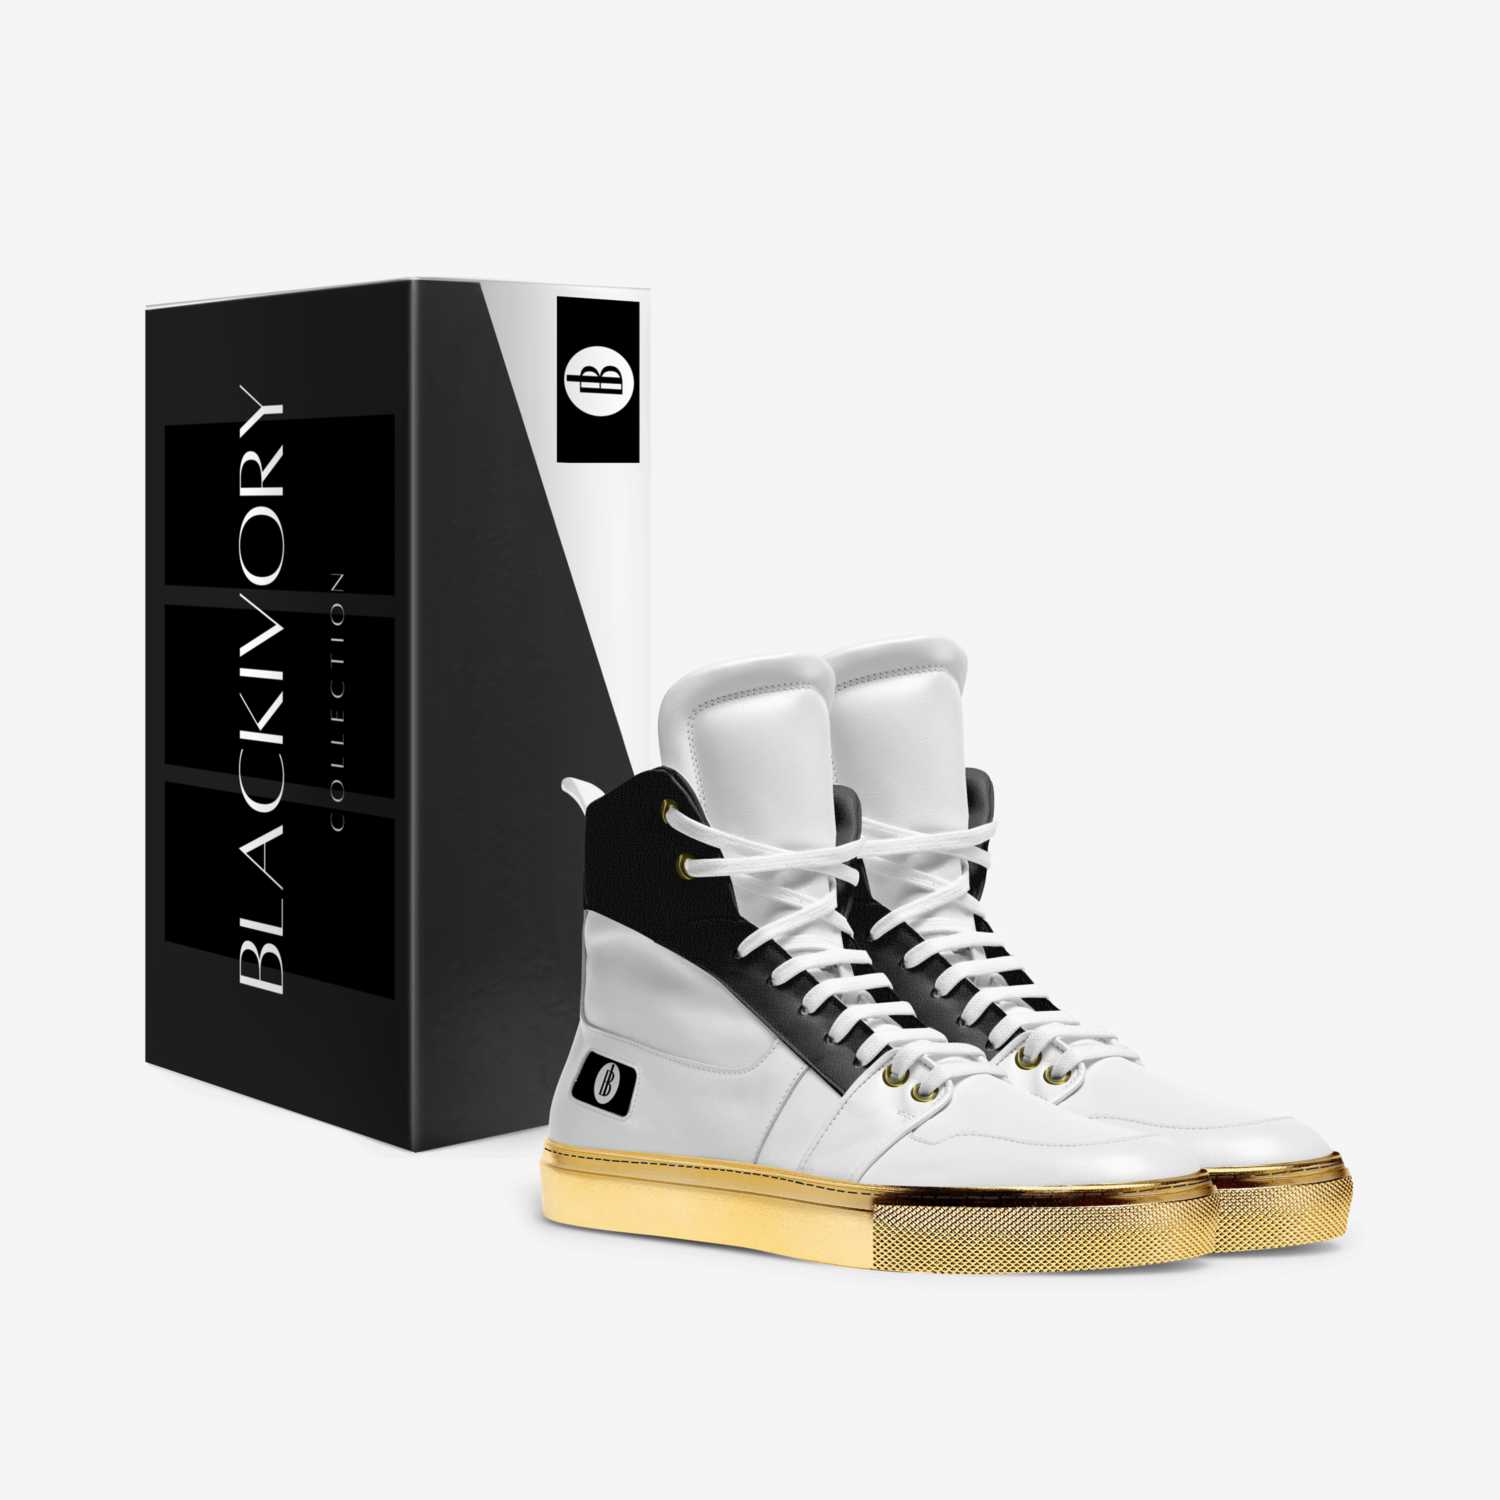 BLACKIVORY custom made in Italy shoes by Niya Hicken | Box view